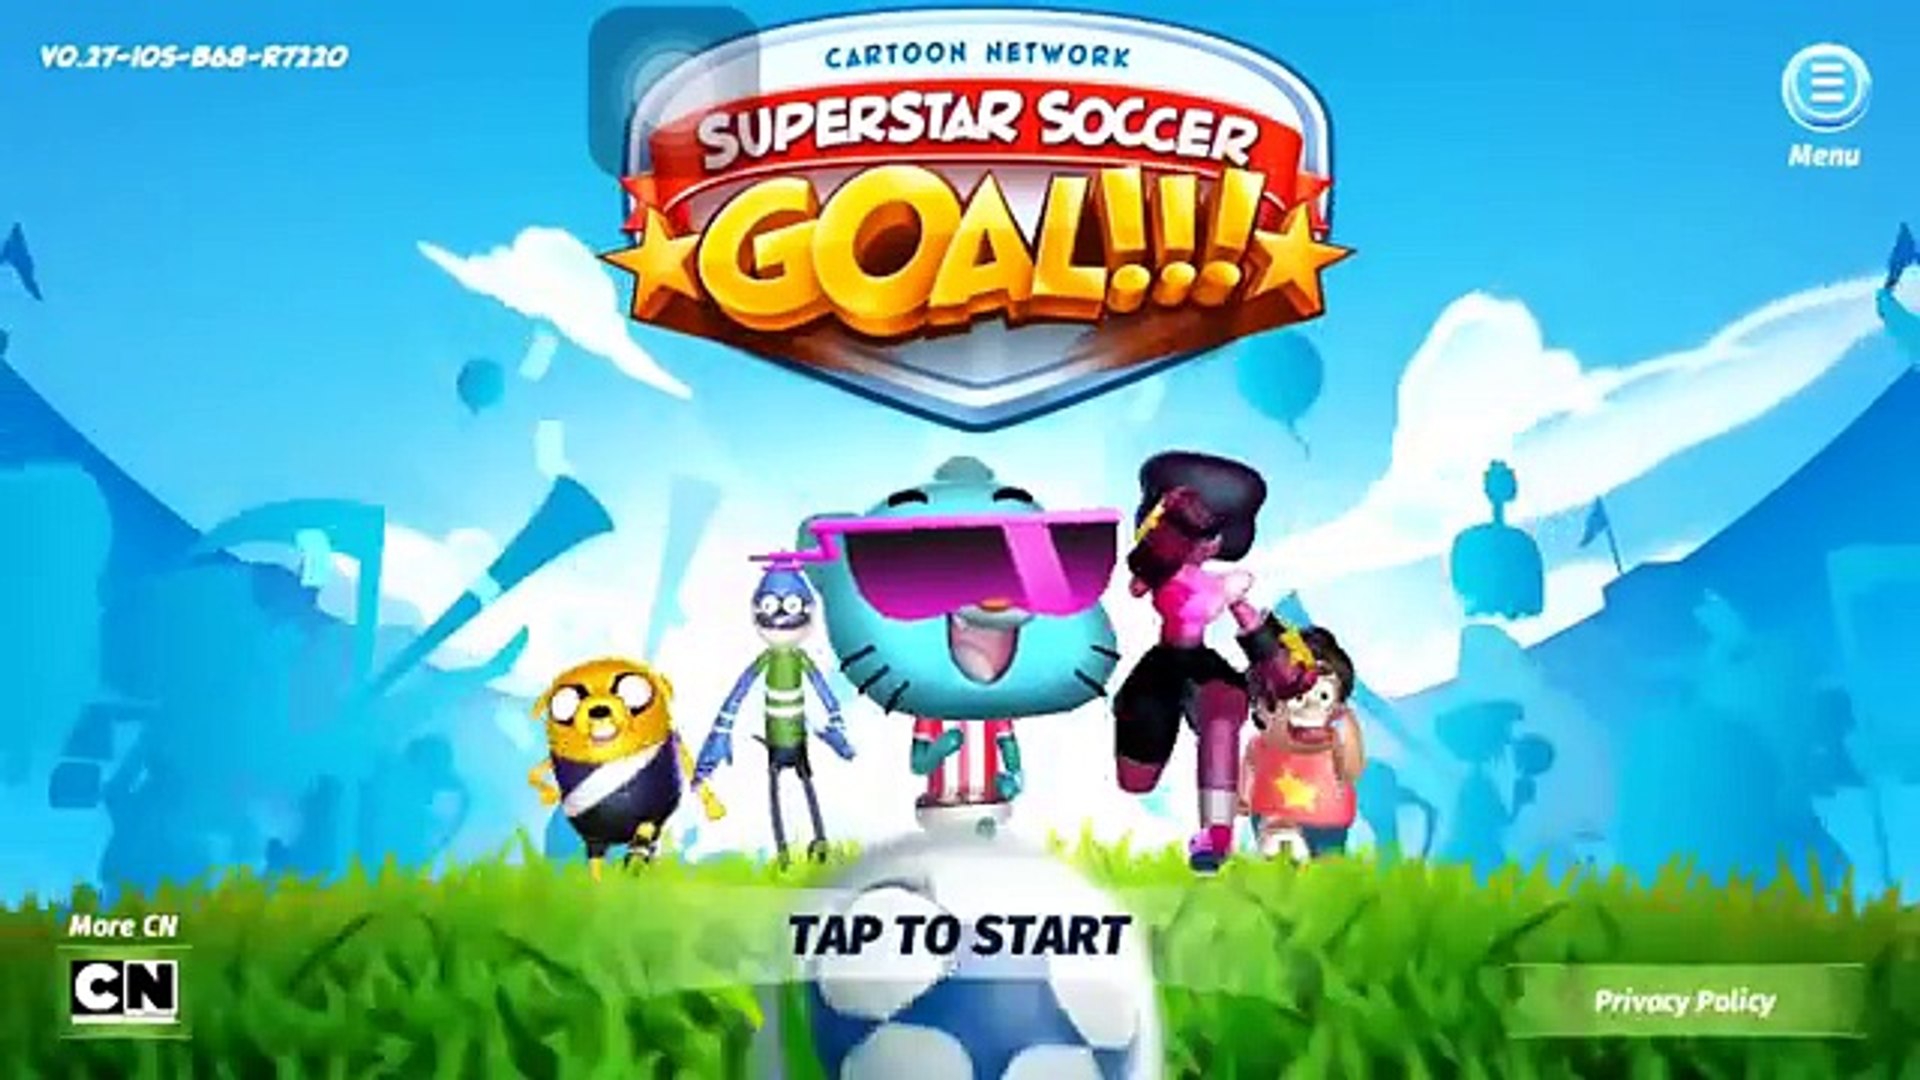 â�£Cartoon Network Superstar Soccer Goal - UNCLE GRANDPA TEAM - UNCLE GRANDPAS GOLD TROPHY